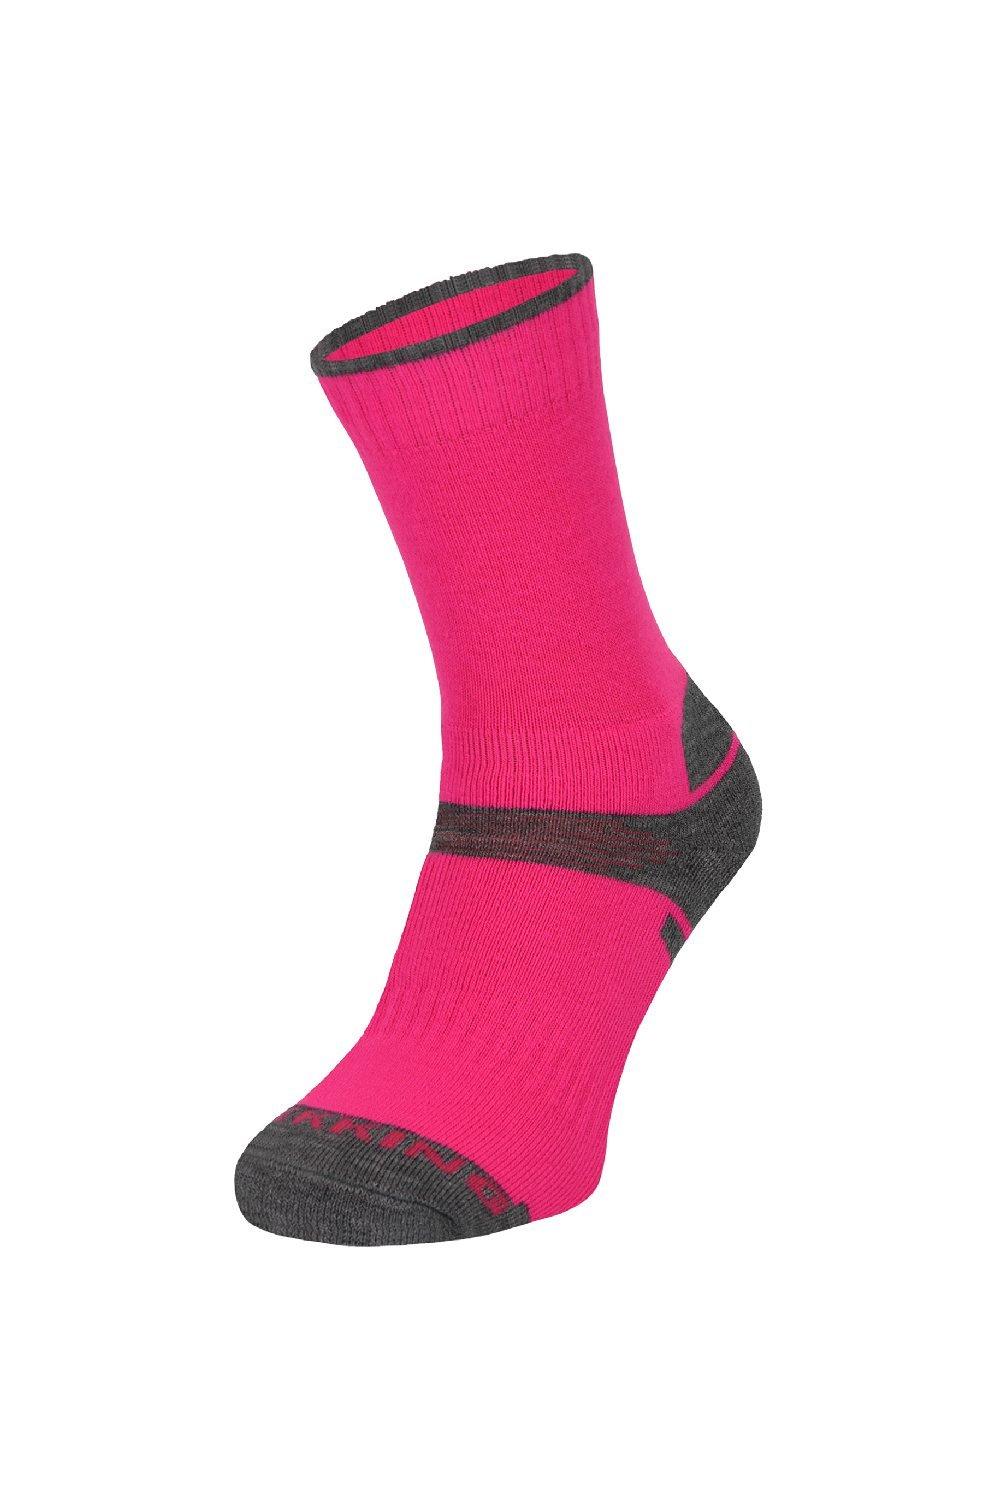 Merino Wool Hiking Socks - Breathable Anti Blister Socks